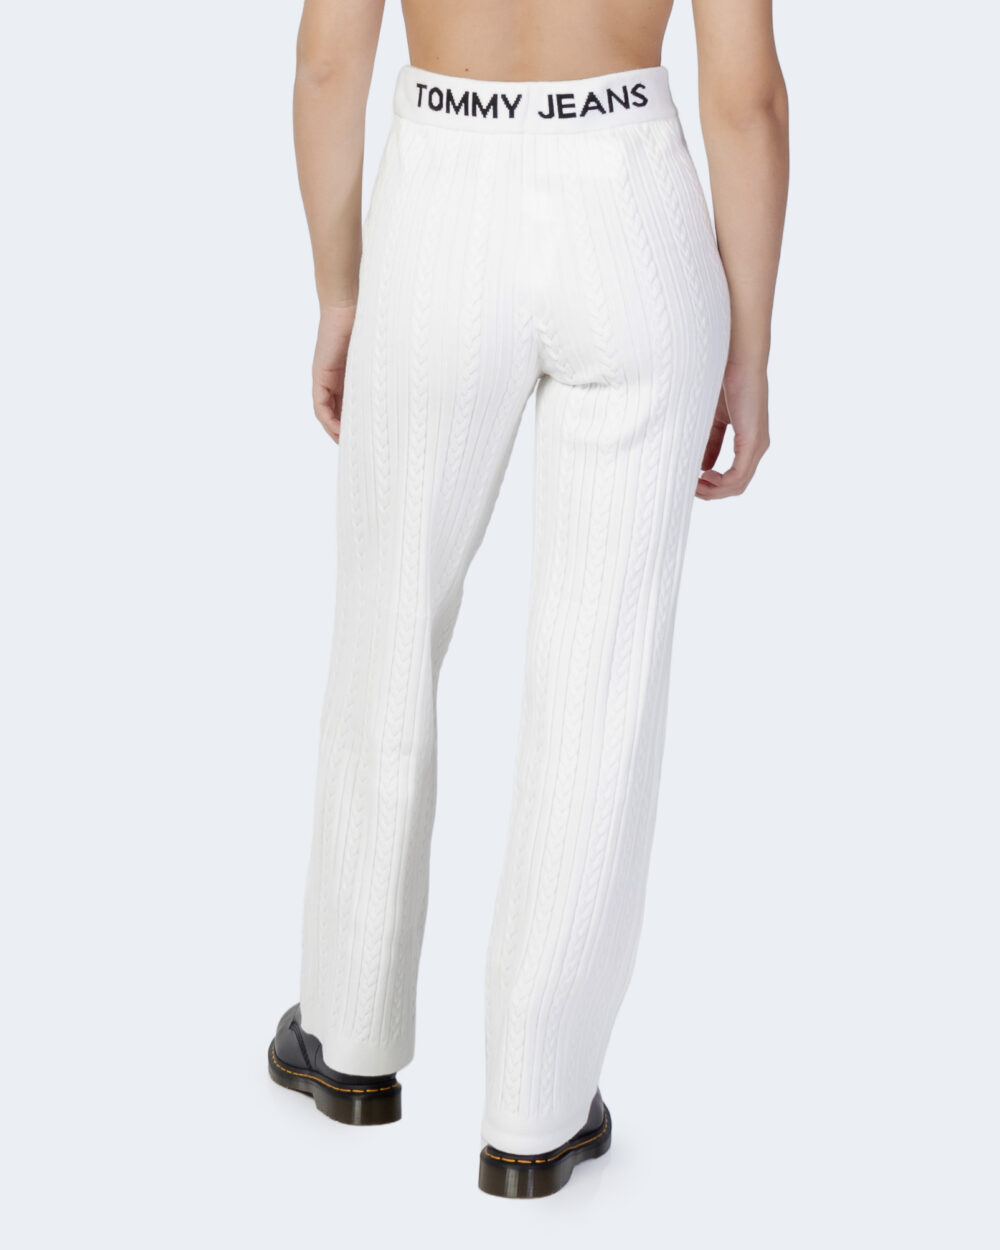 Pantaloni bootcut Tommy Hilfiger Jeans TJW CABLE KNIT PANTS Bianco - Foto 3